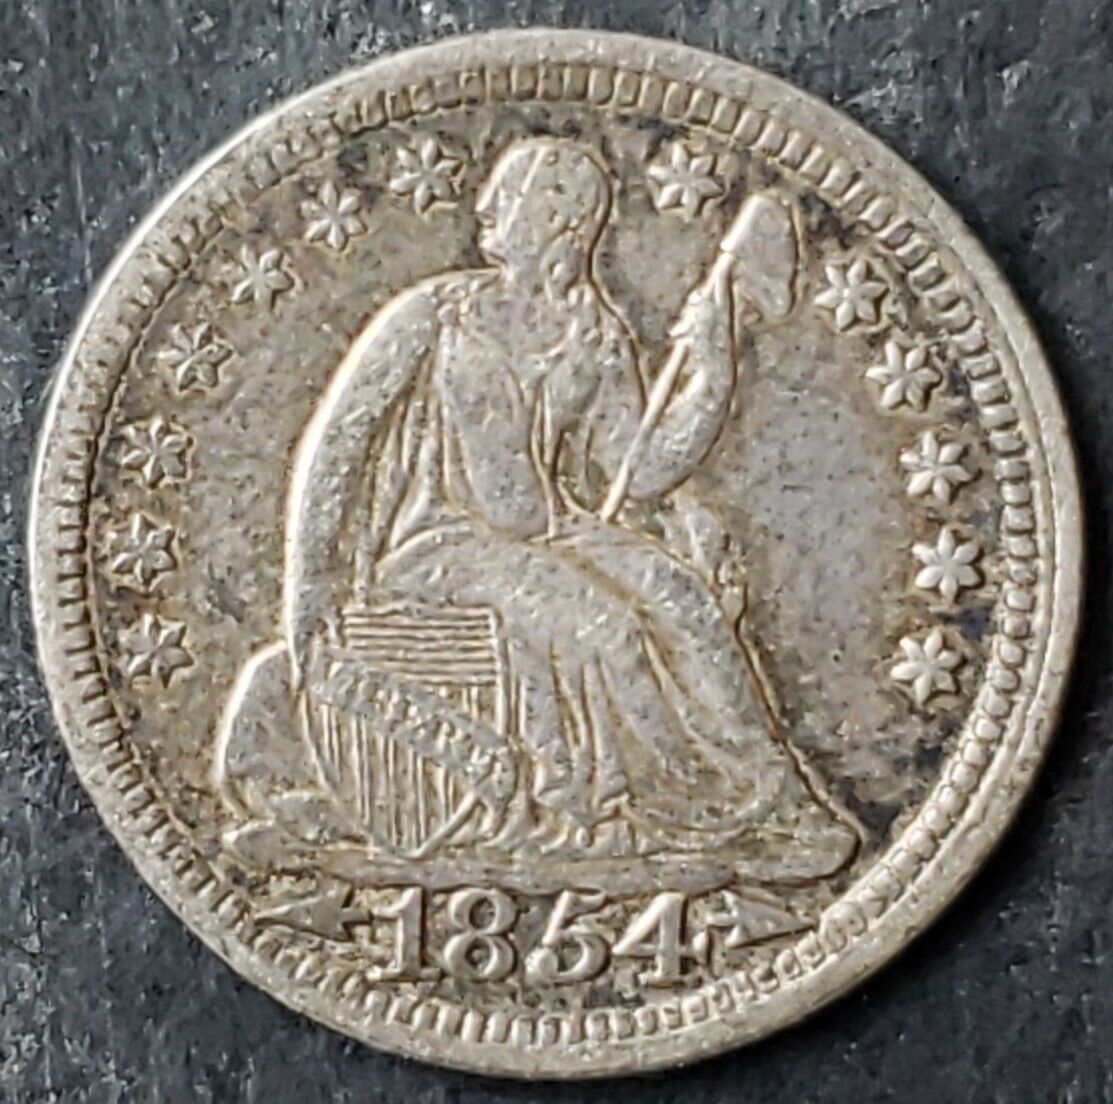 1854 5c Seated Liberty Silver Half Dime